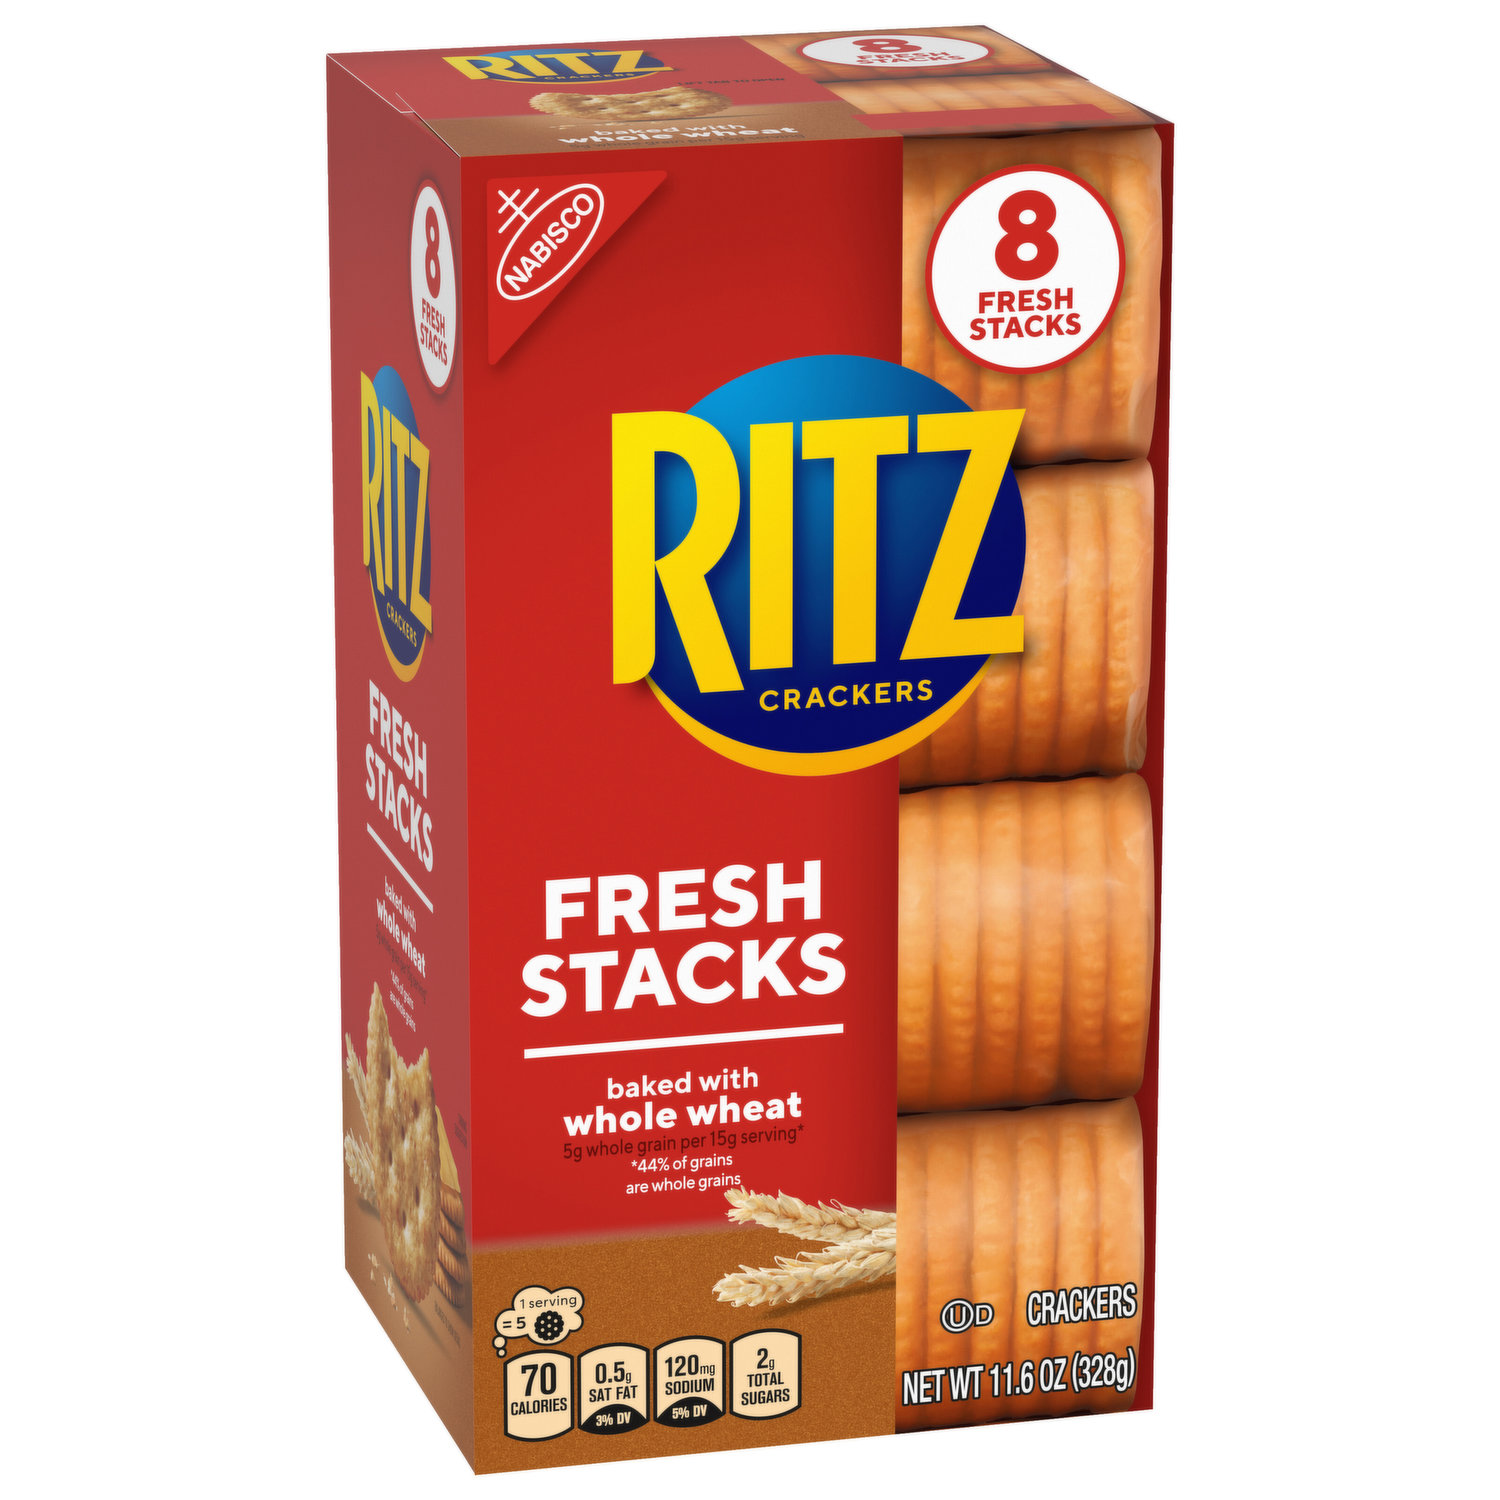 Nabisco Ritz Peanut Butter Cracker Sandwiches Family Size, 1.38